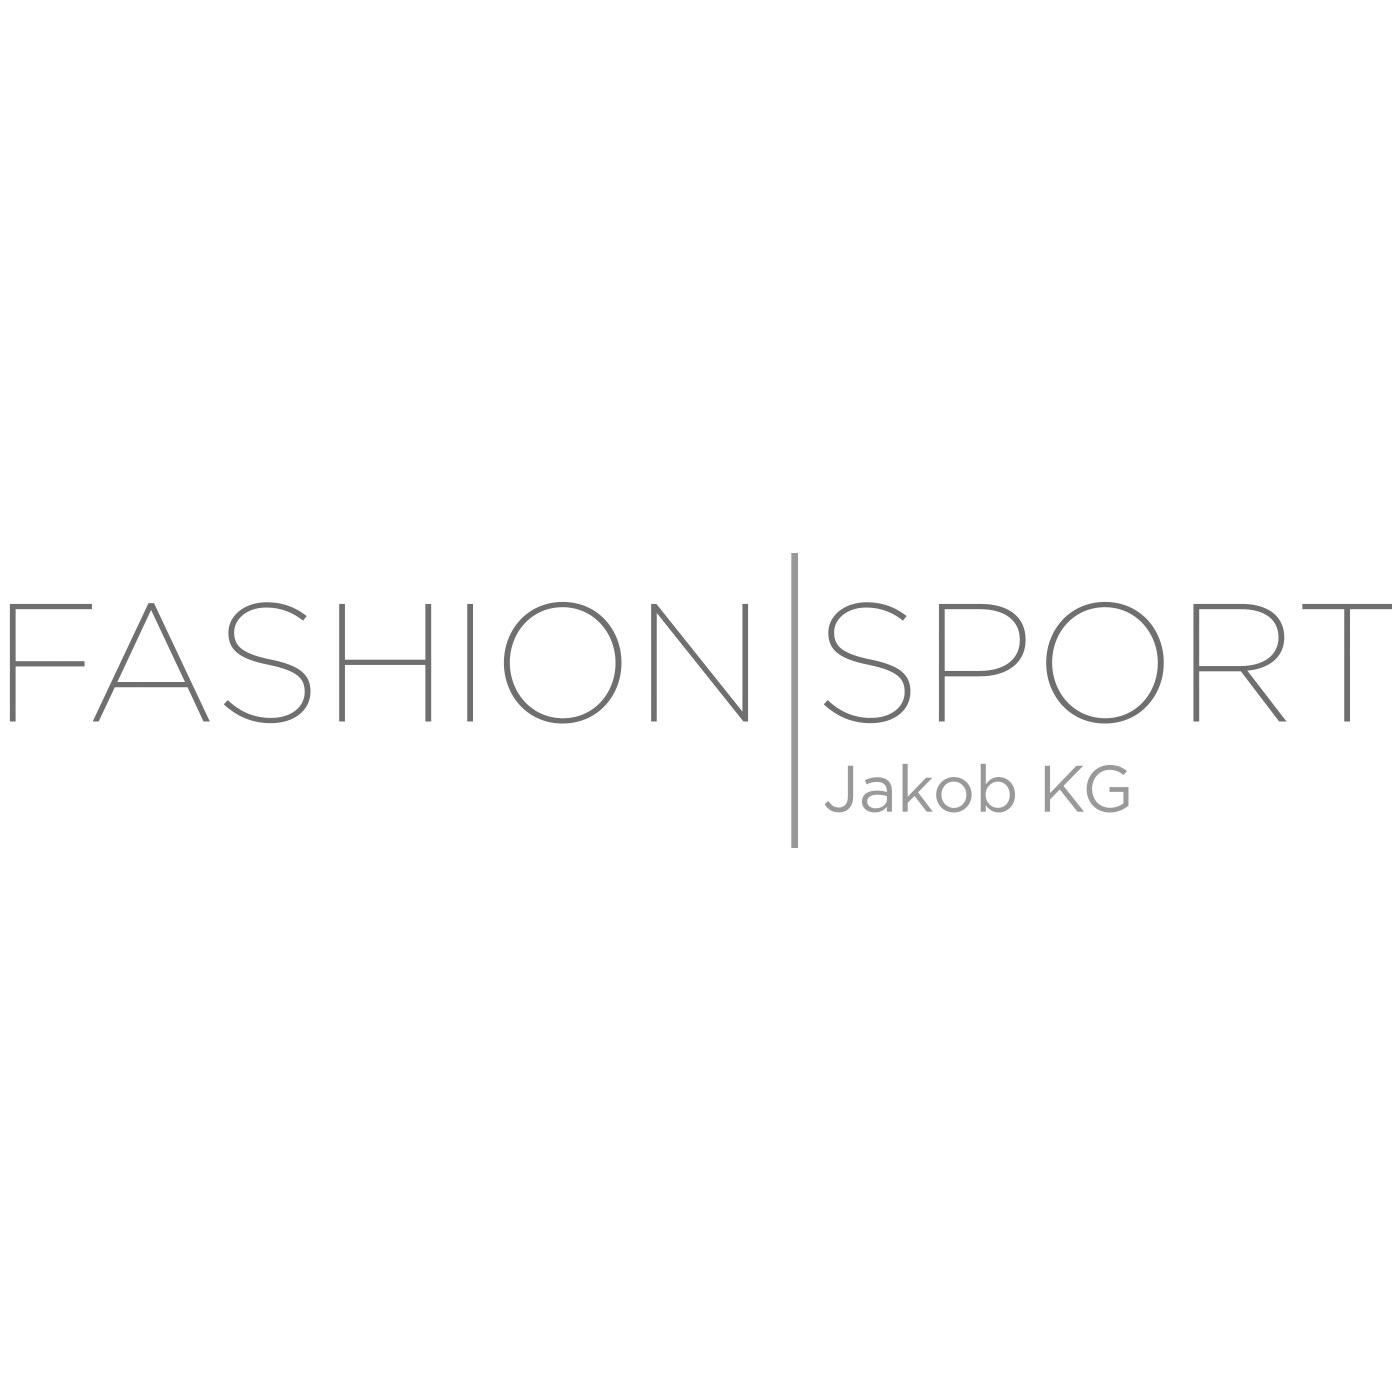 Logo in grau von Fashion Sport Jakob KG